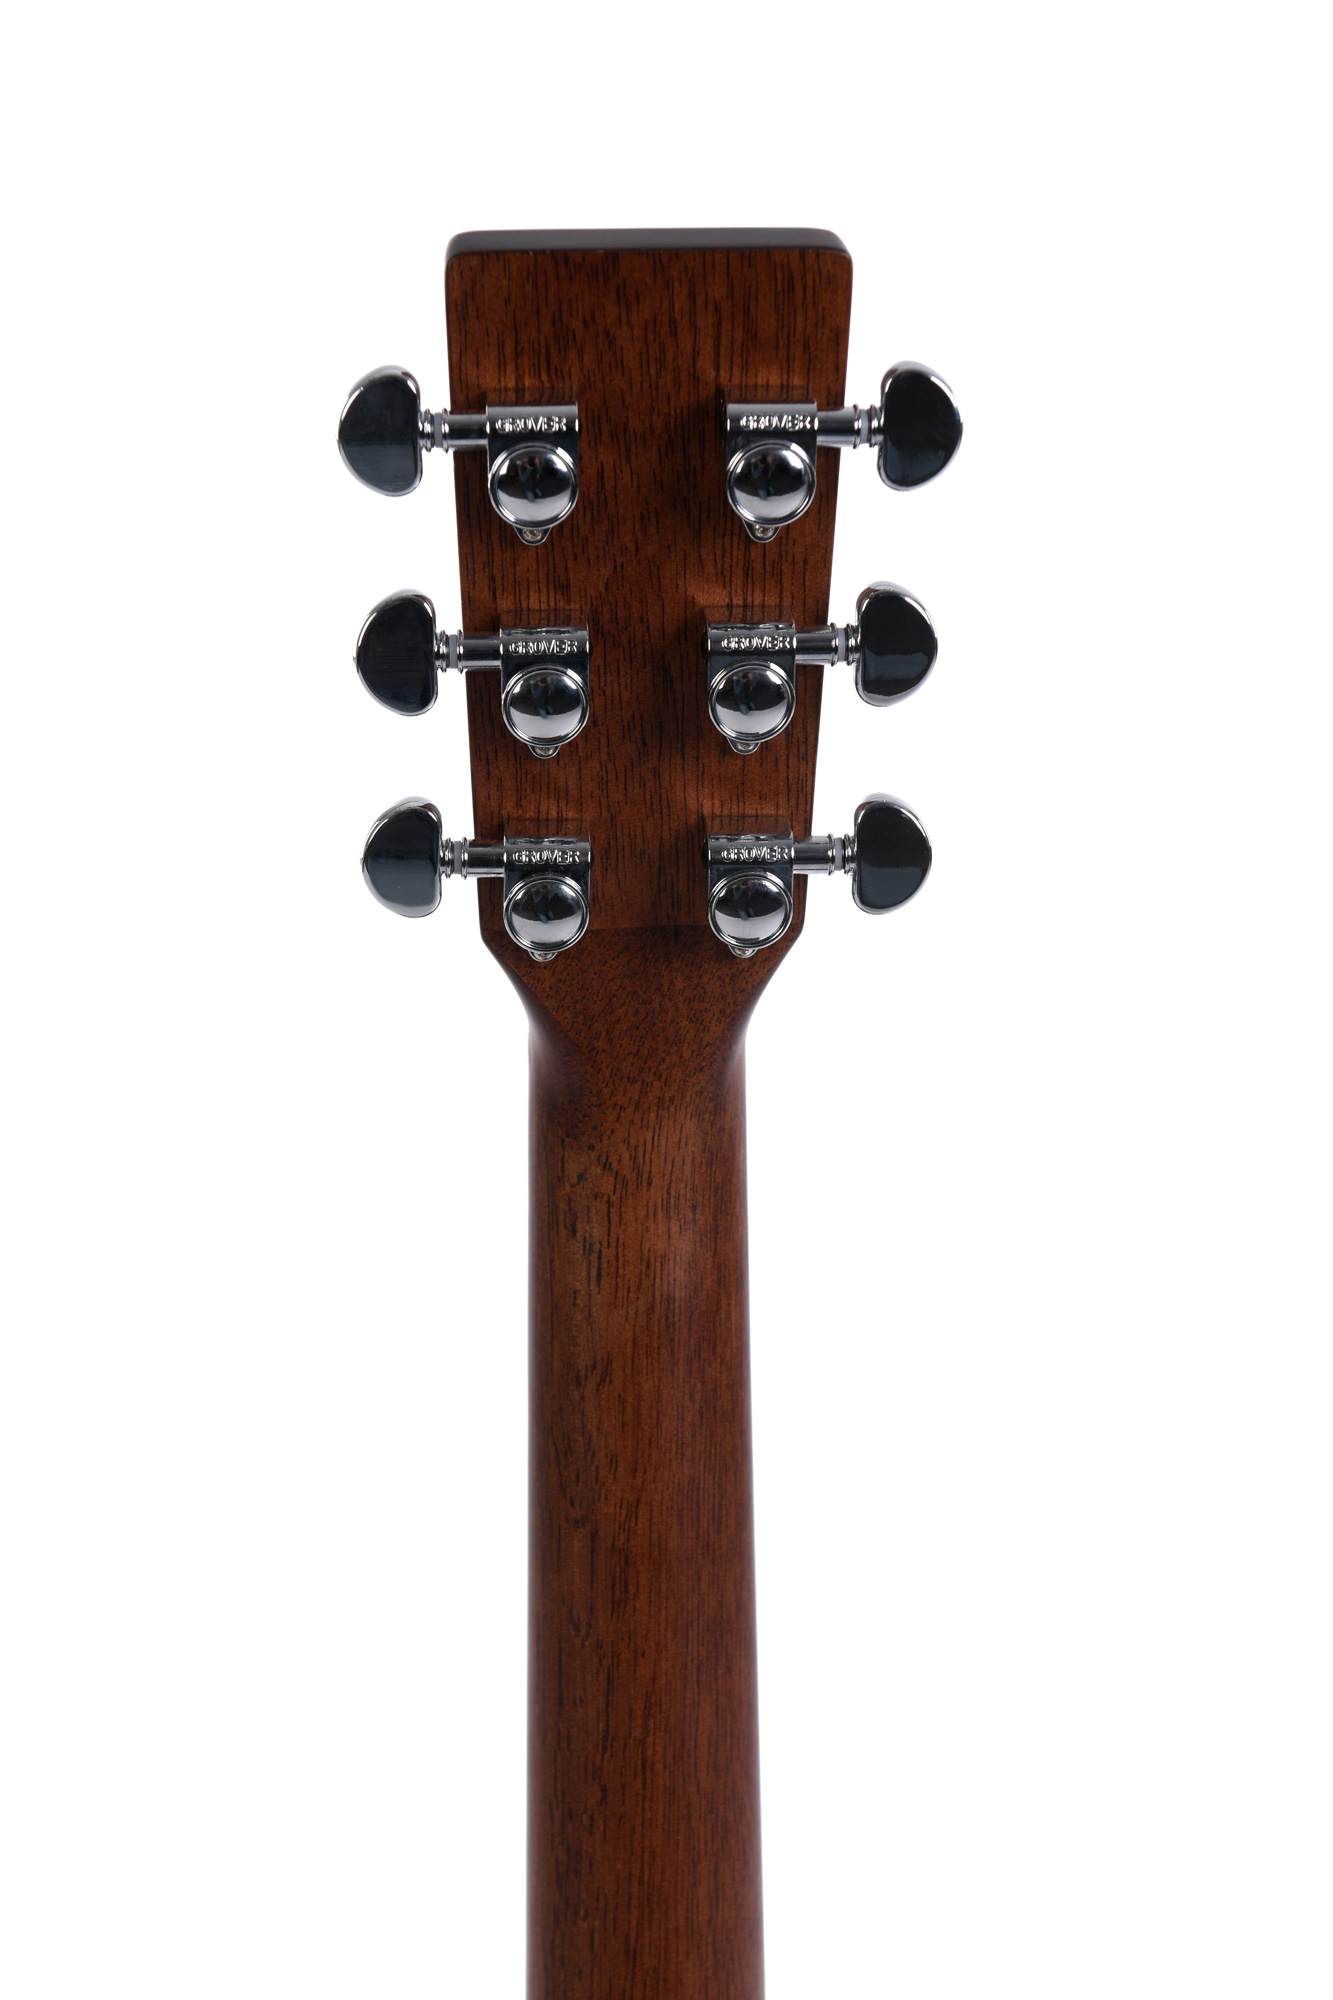 Sigma Guitars 000M-15E